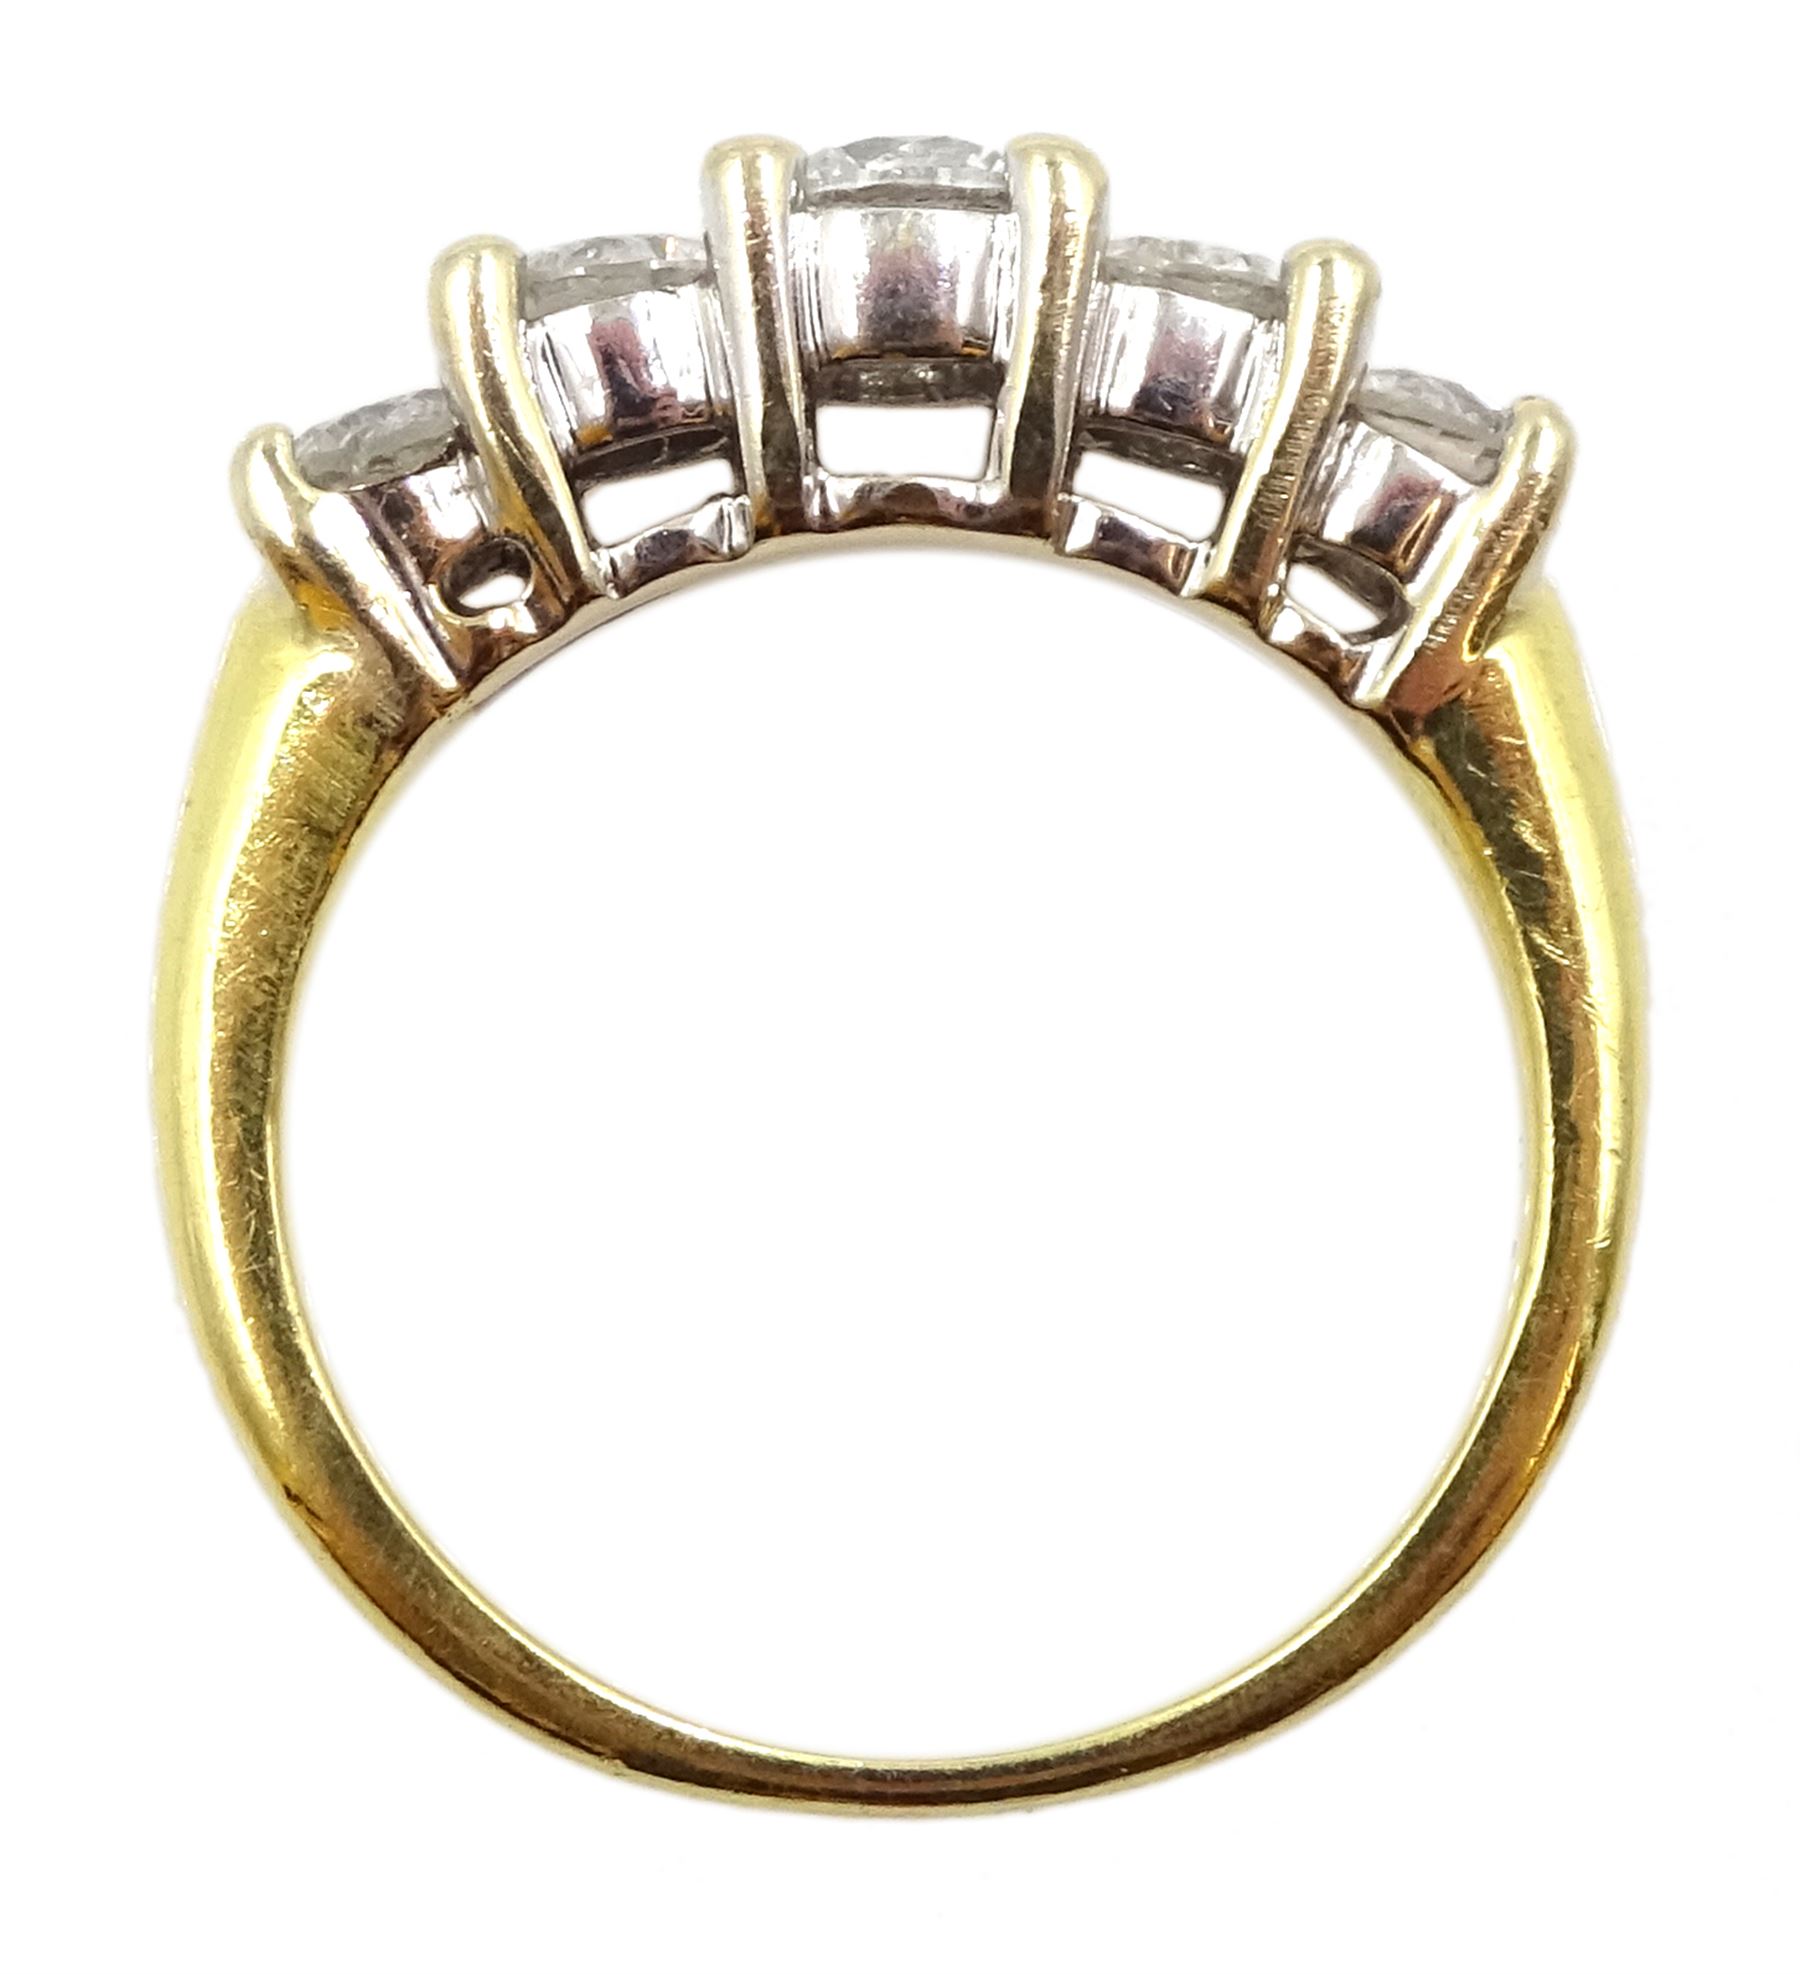 18ct gold five stone round brilliant cut diamond ring - Image 4 of 4